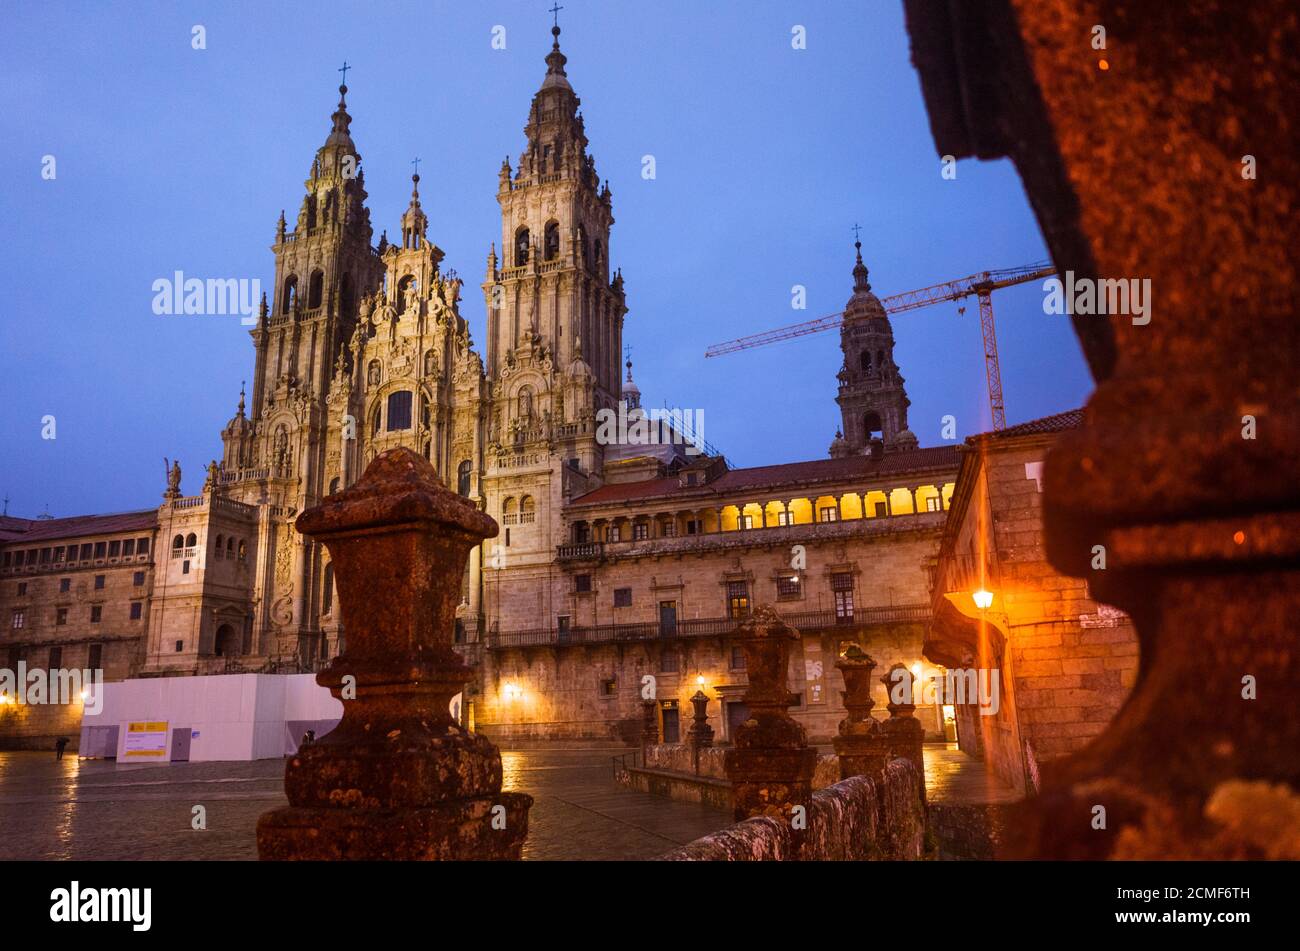 Santiago de Compostela, A Coruña province, Galicia, Spain - February 12th, 2020 : Illuminated Baroque facade of the cathedral in the Obradoiro square. Stock Photo